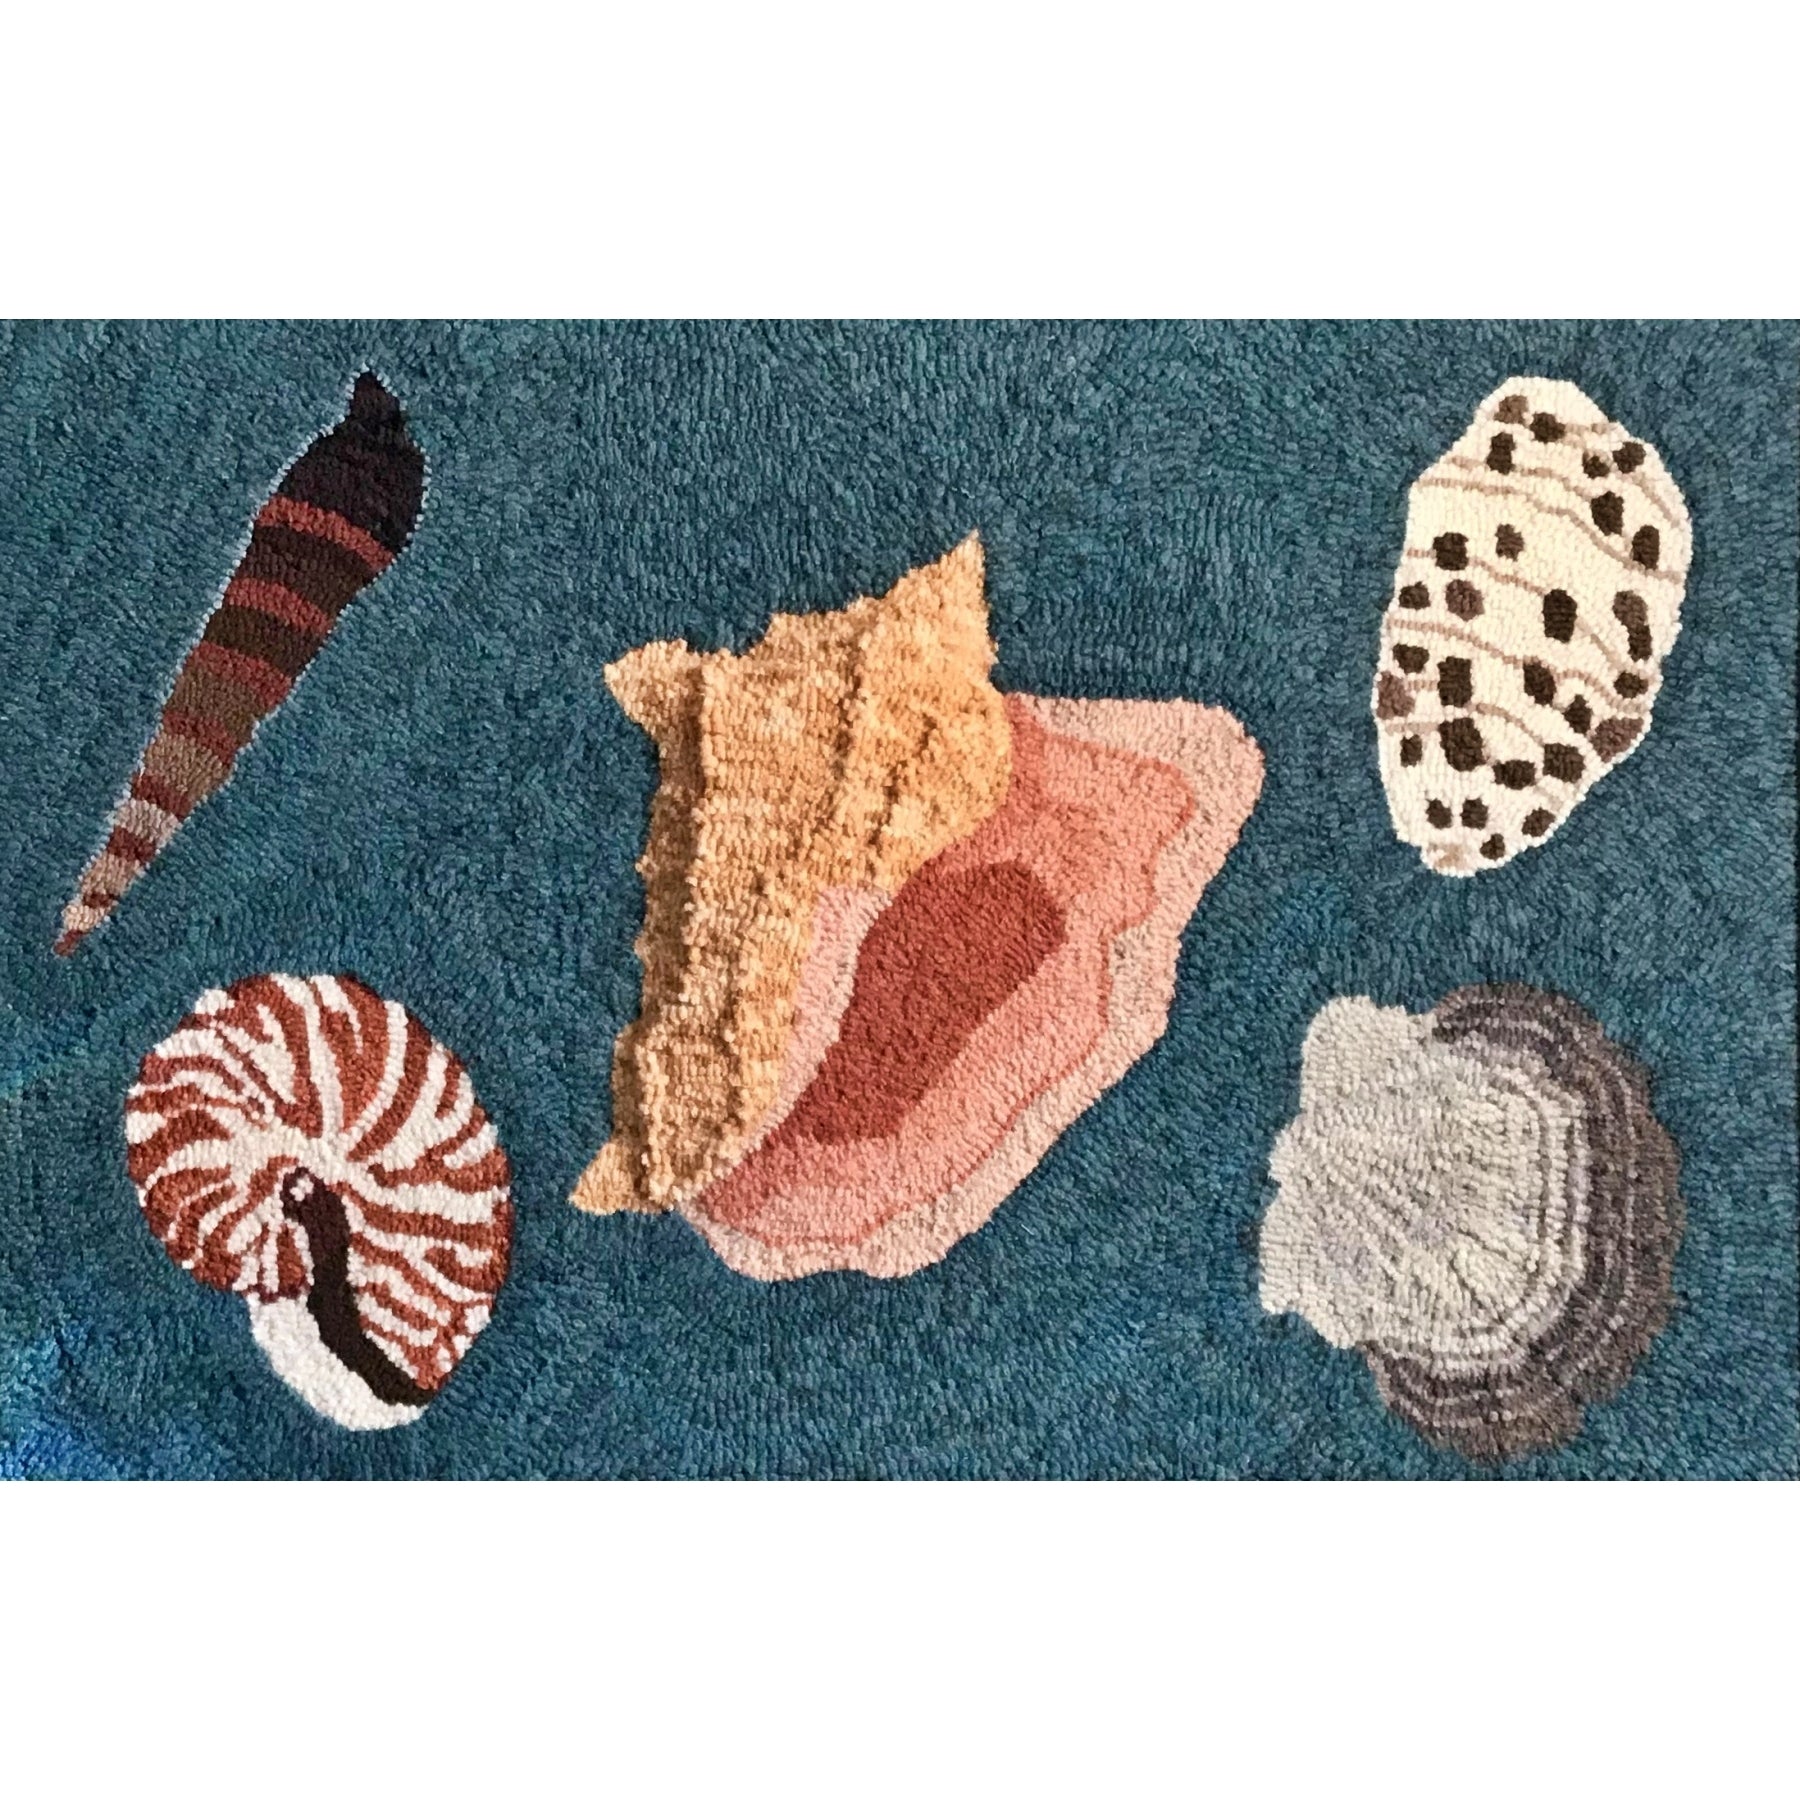 Seashells, rug hooked by Kelly Hoard